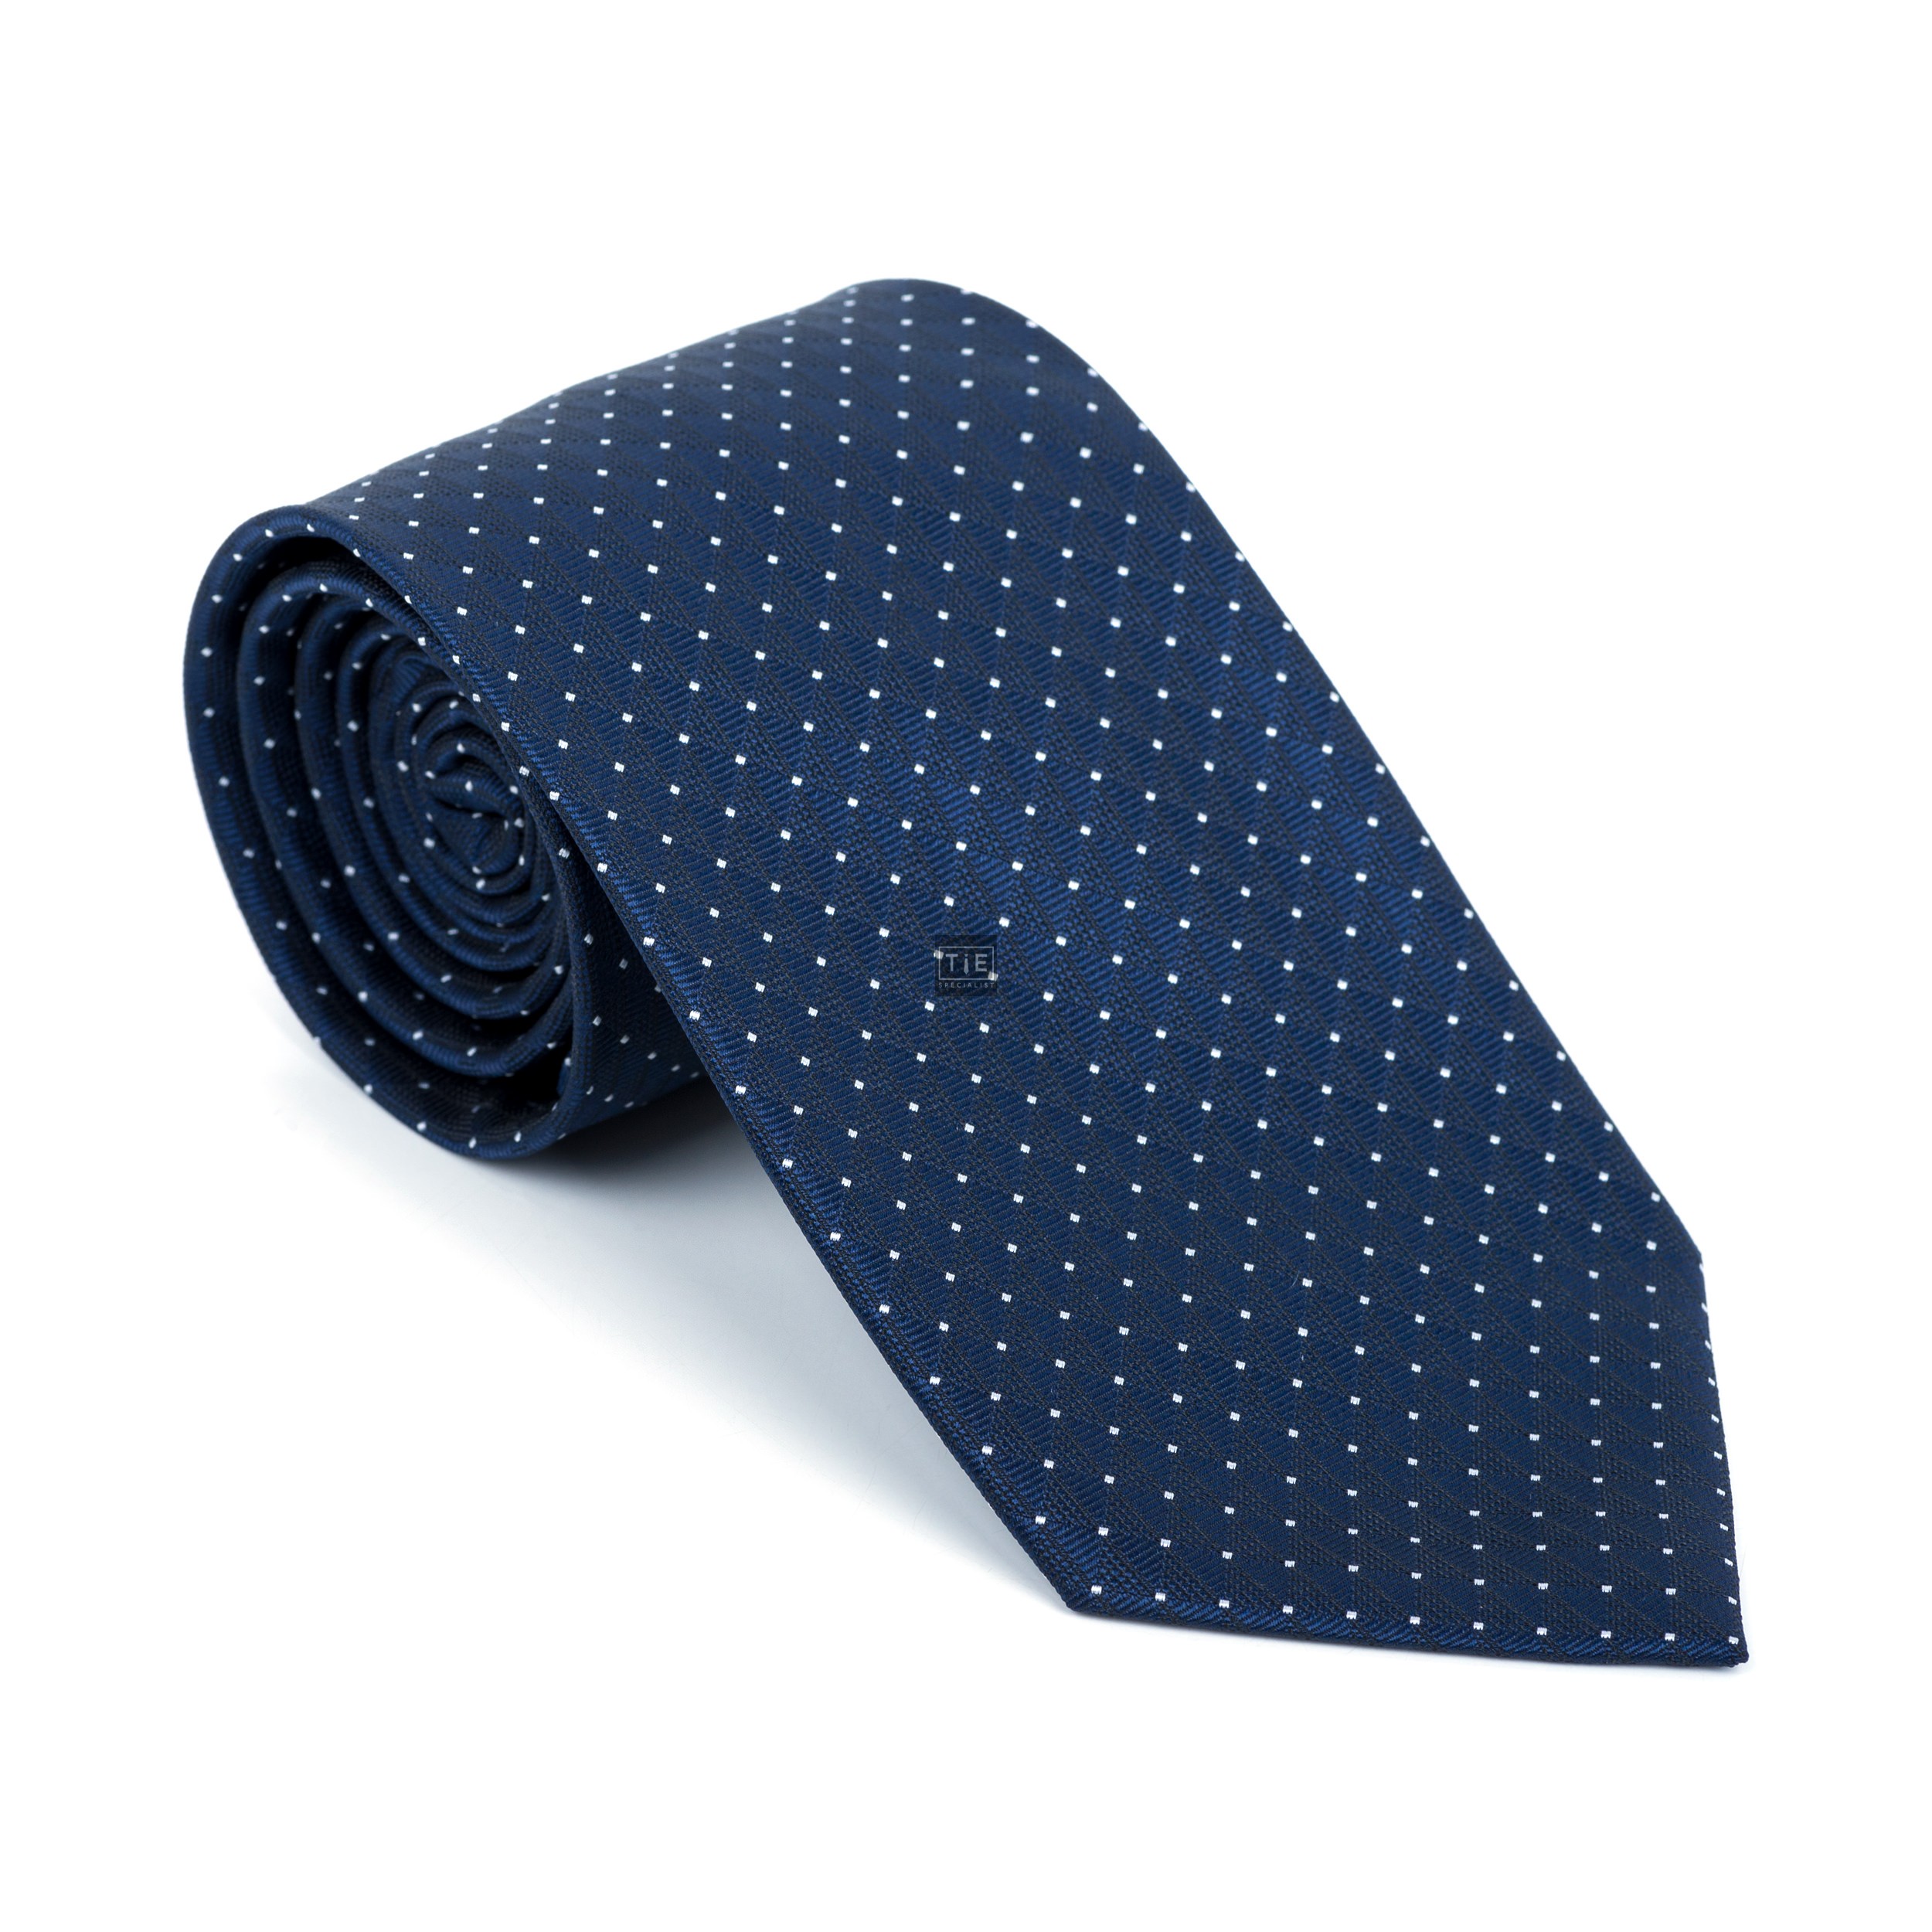 Fine Polka Dot Formal Tie - Traditional or Slim Width